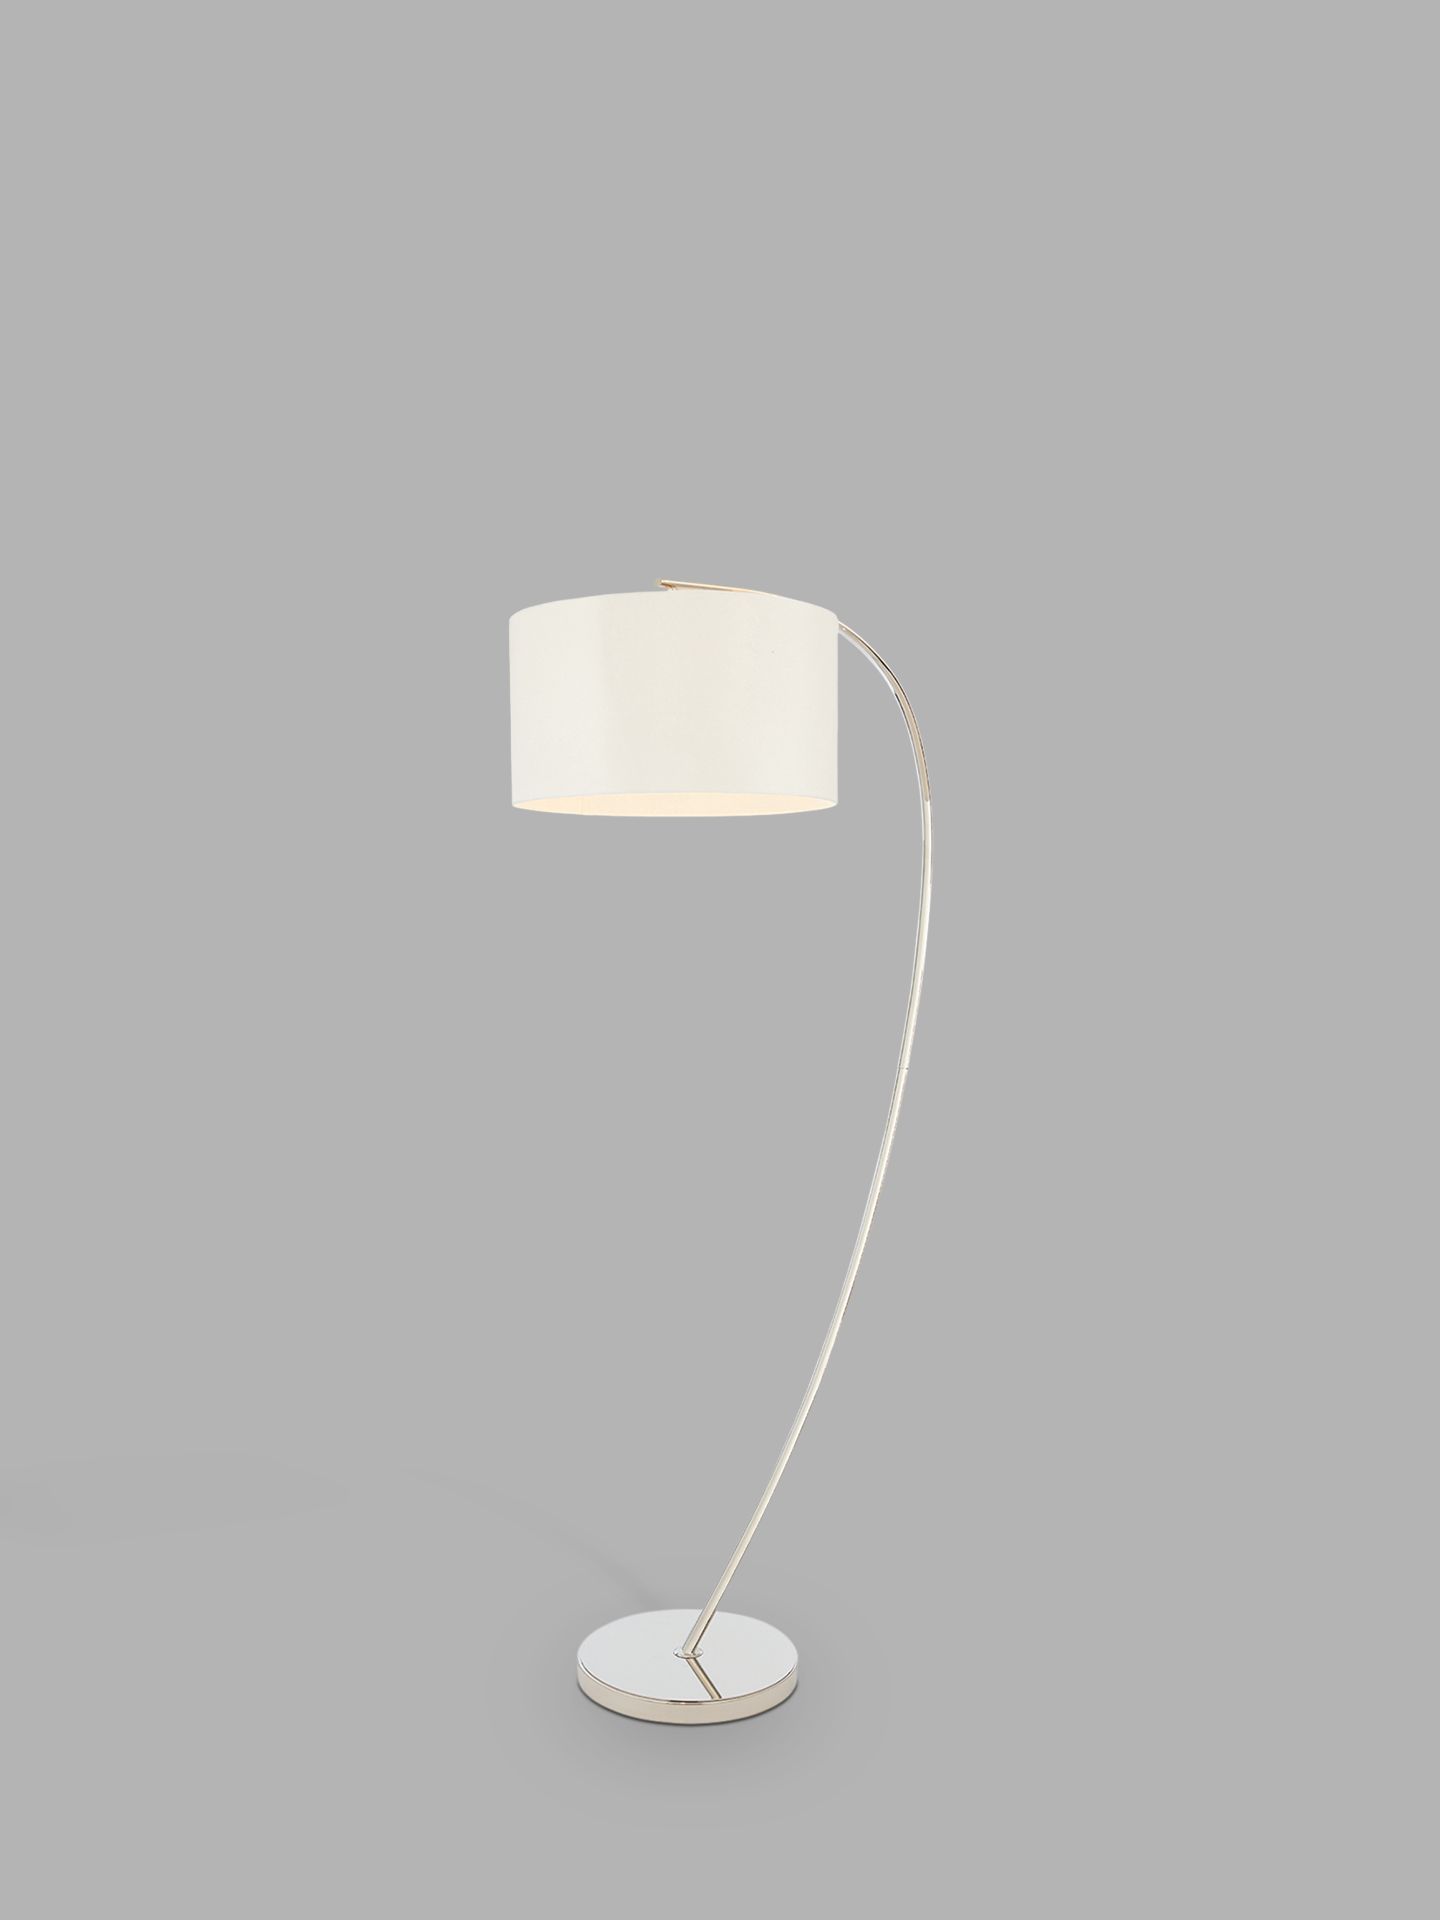 Bay Lighting Aribella Floor Lamp, Nickel